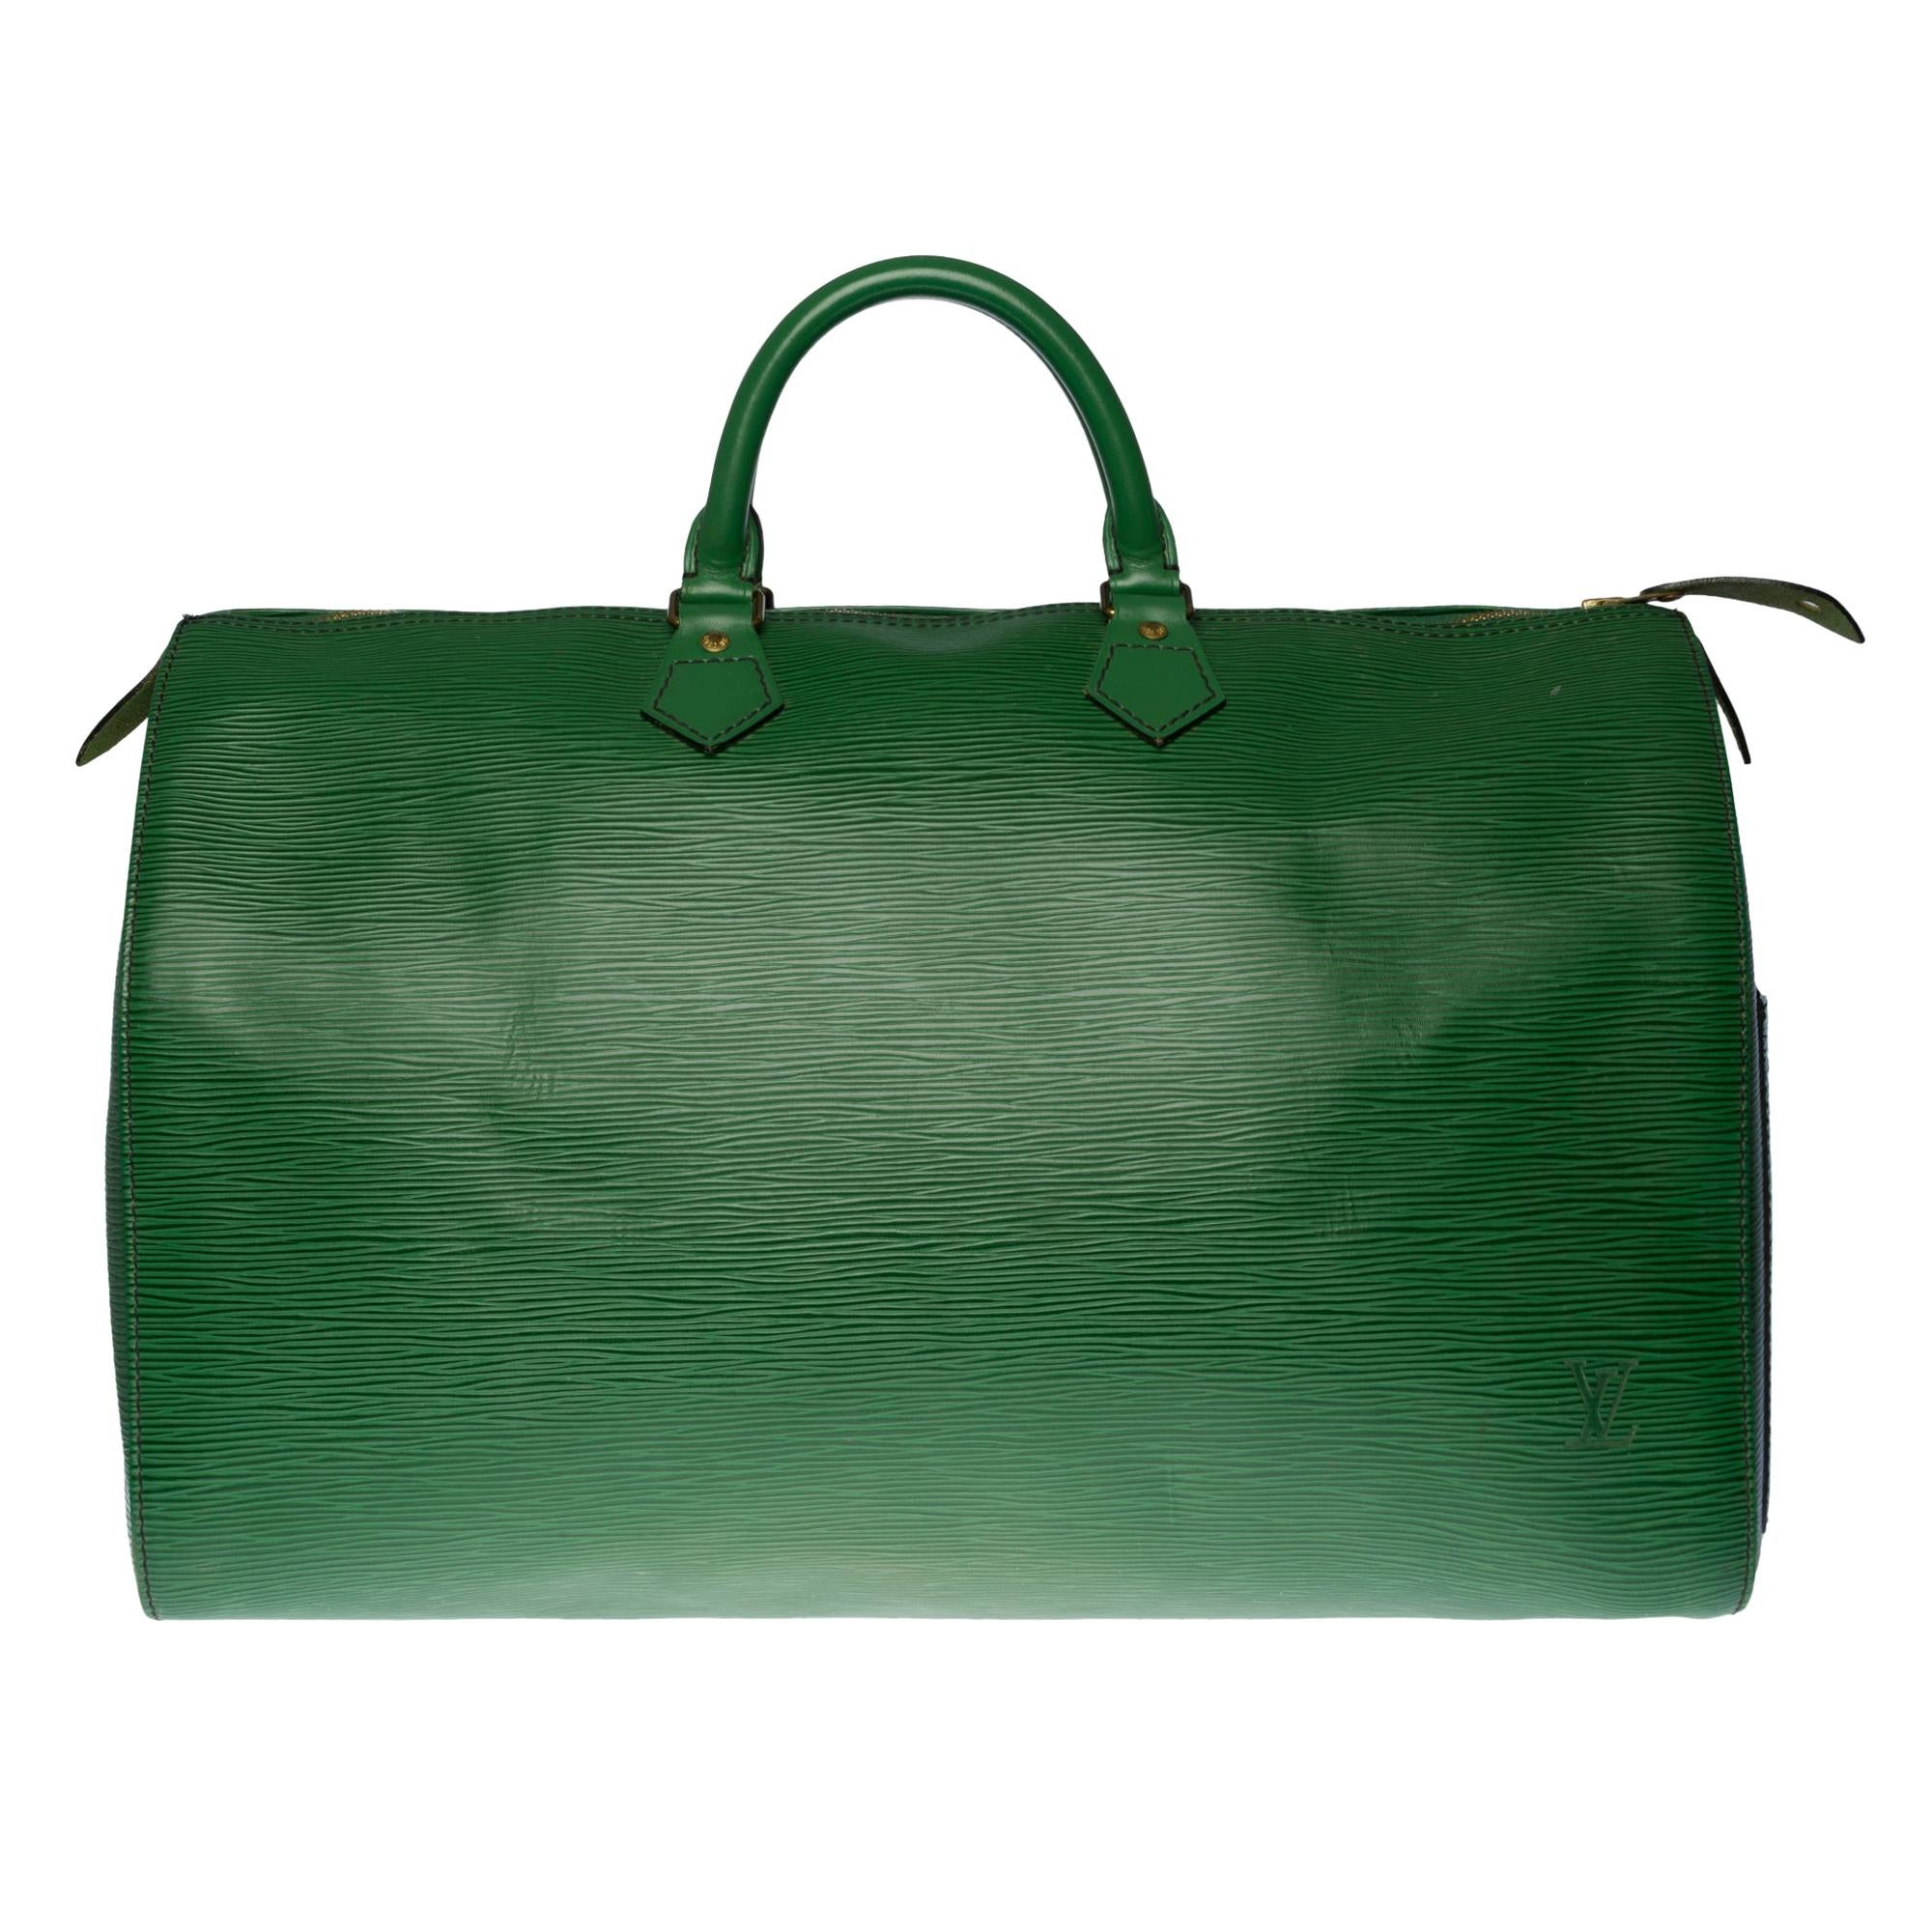 Stunning Louis Vuitton Speedy 40 handbag in green épi leather